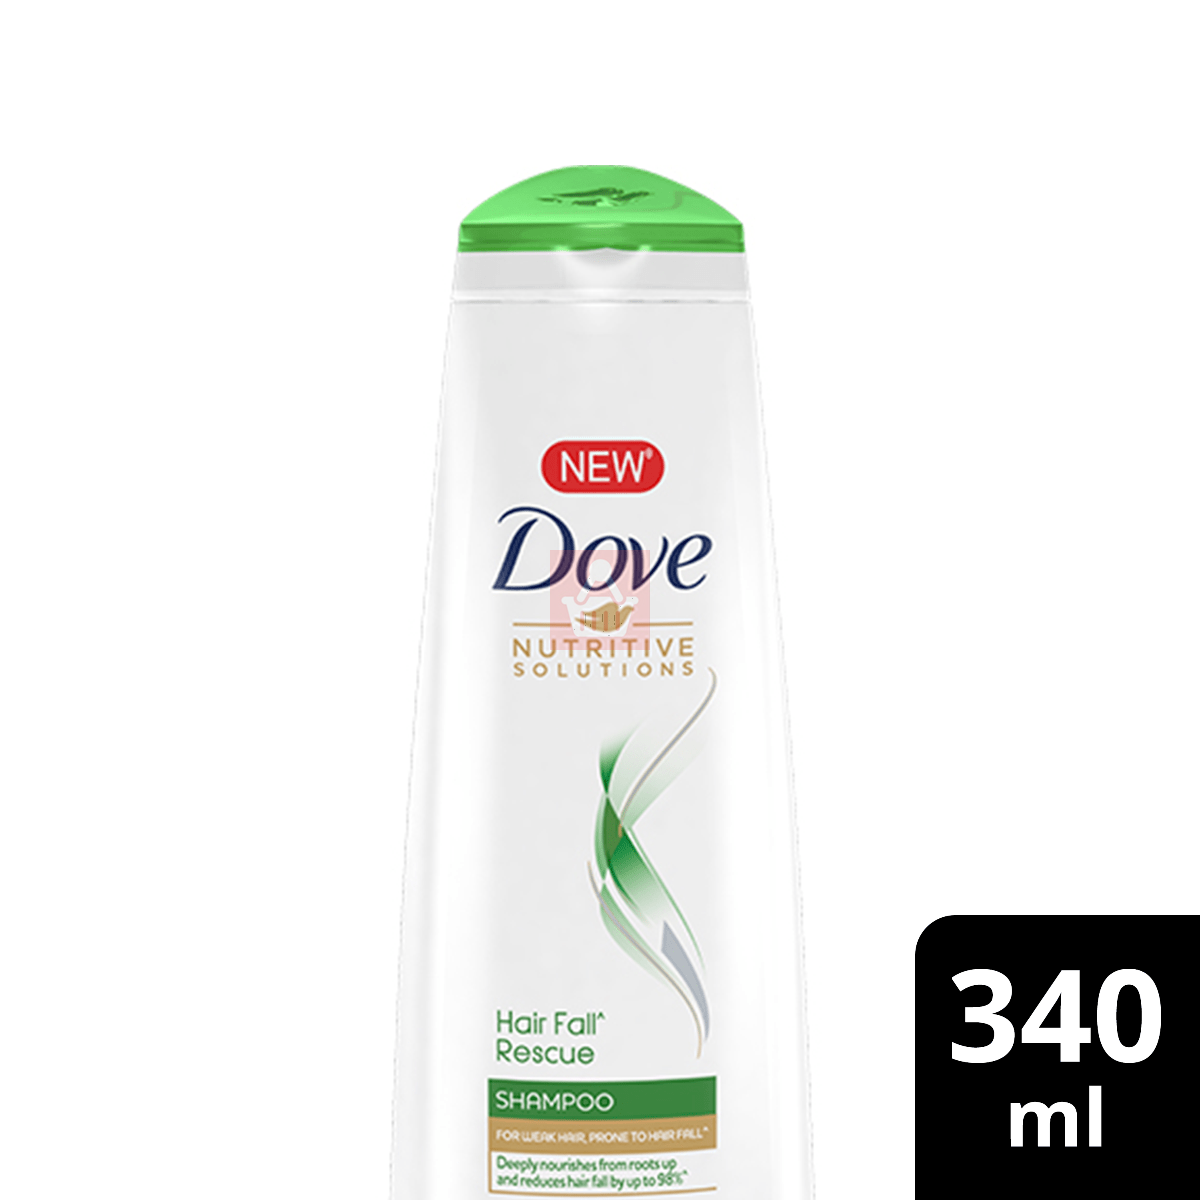 Dove Nutritive Solution Hair Fall Rescue For Weak Hair Shampoo - 340ml